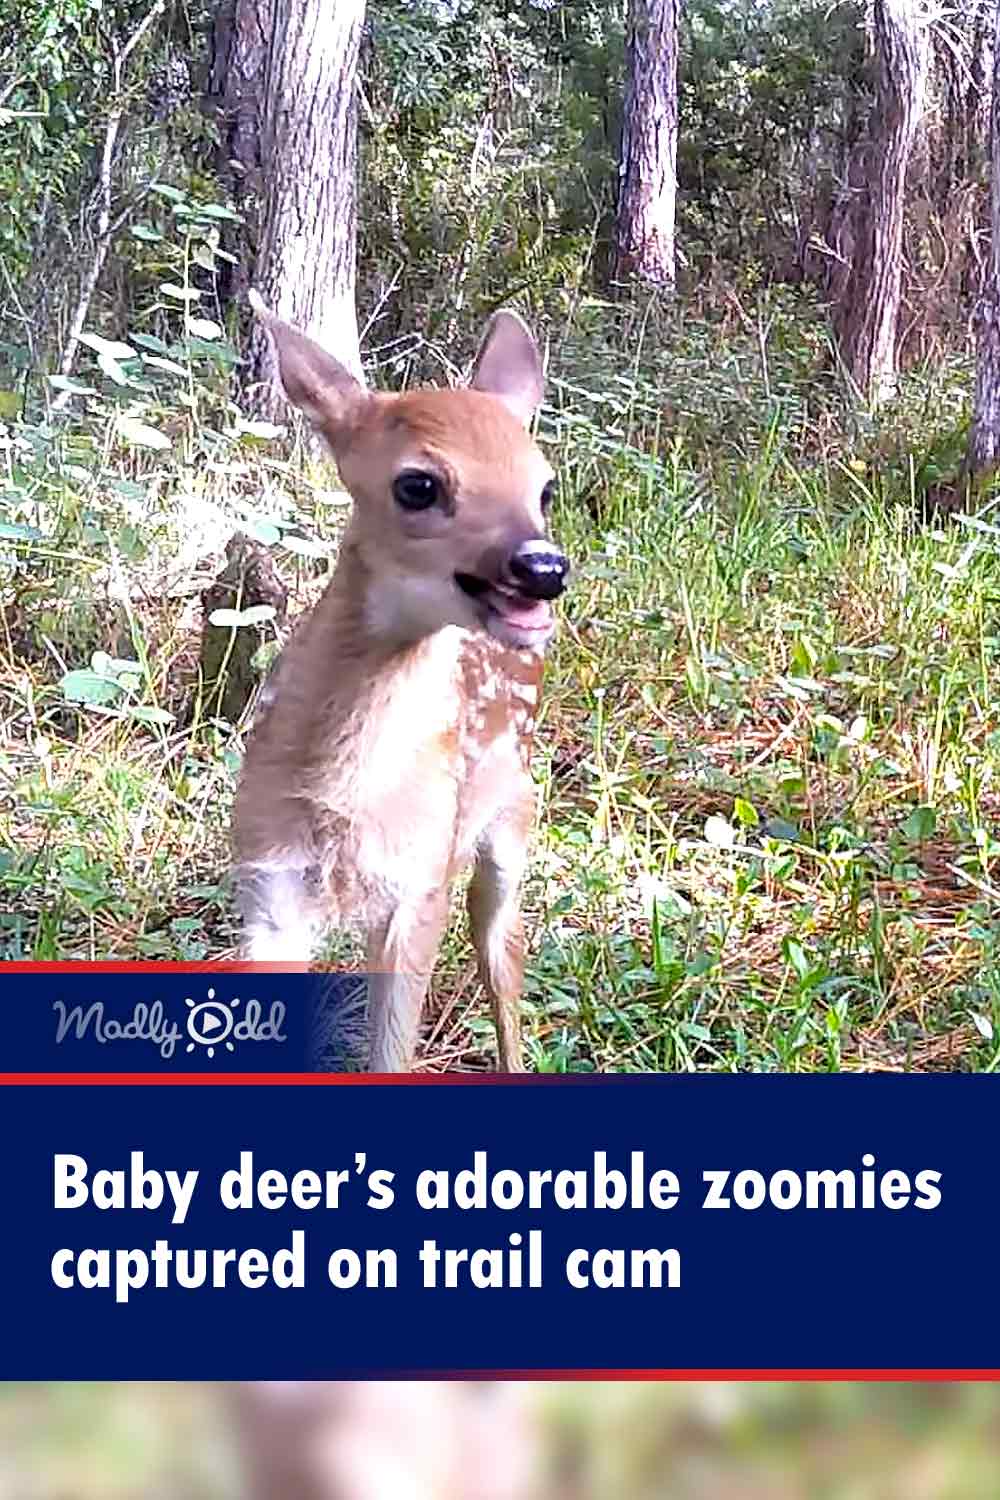 Baby deer’s adorable zoomies captured on trail cam